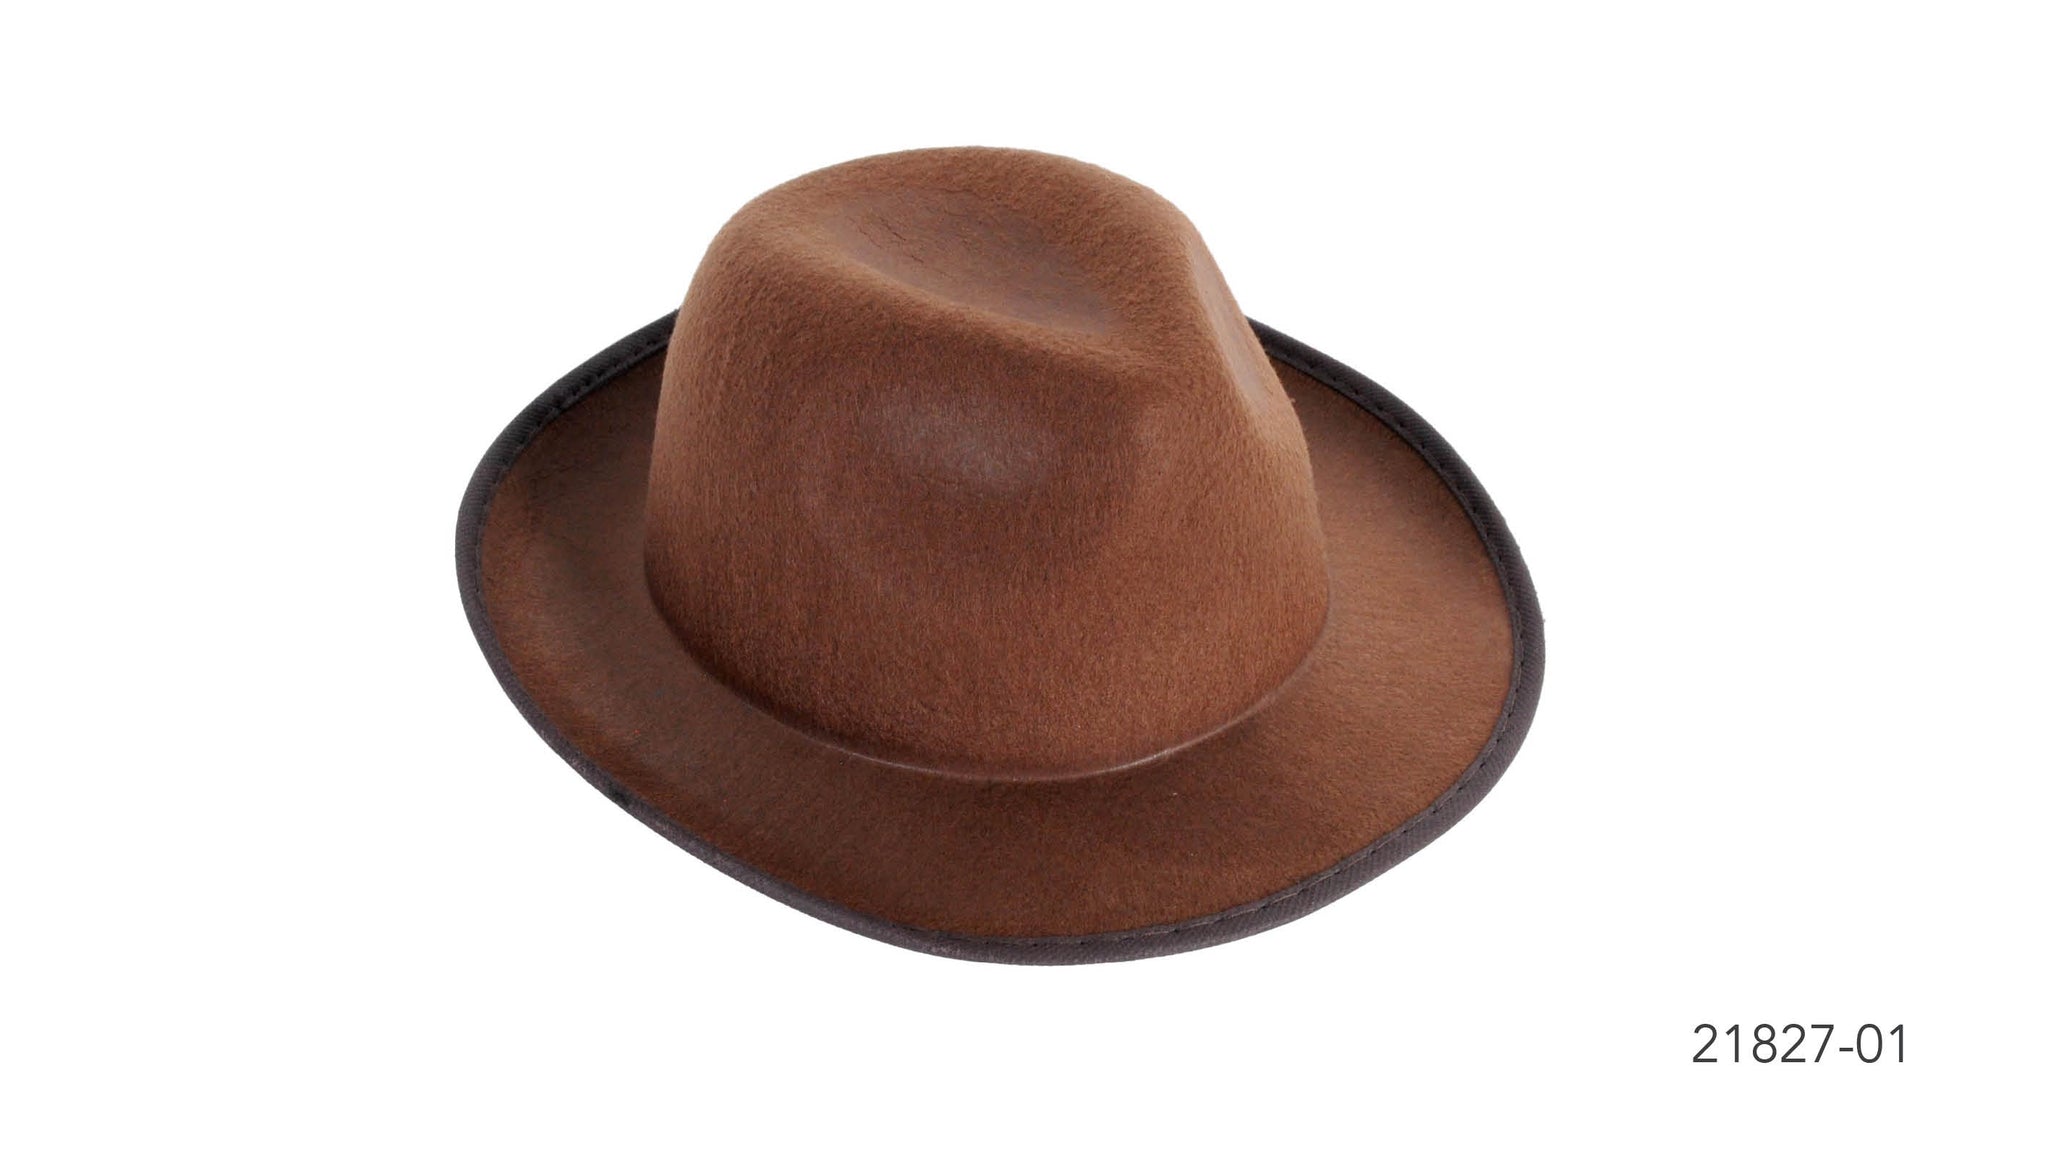 Fedora Brown Felt Hat